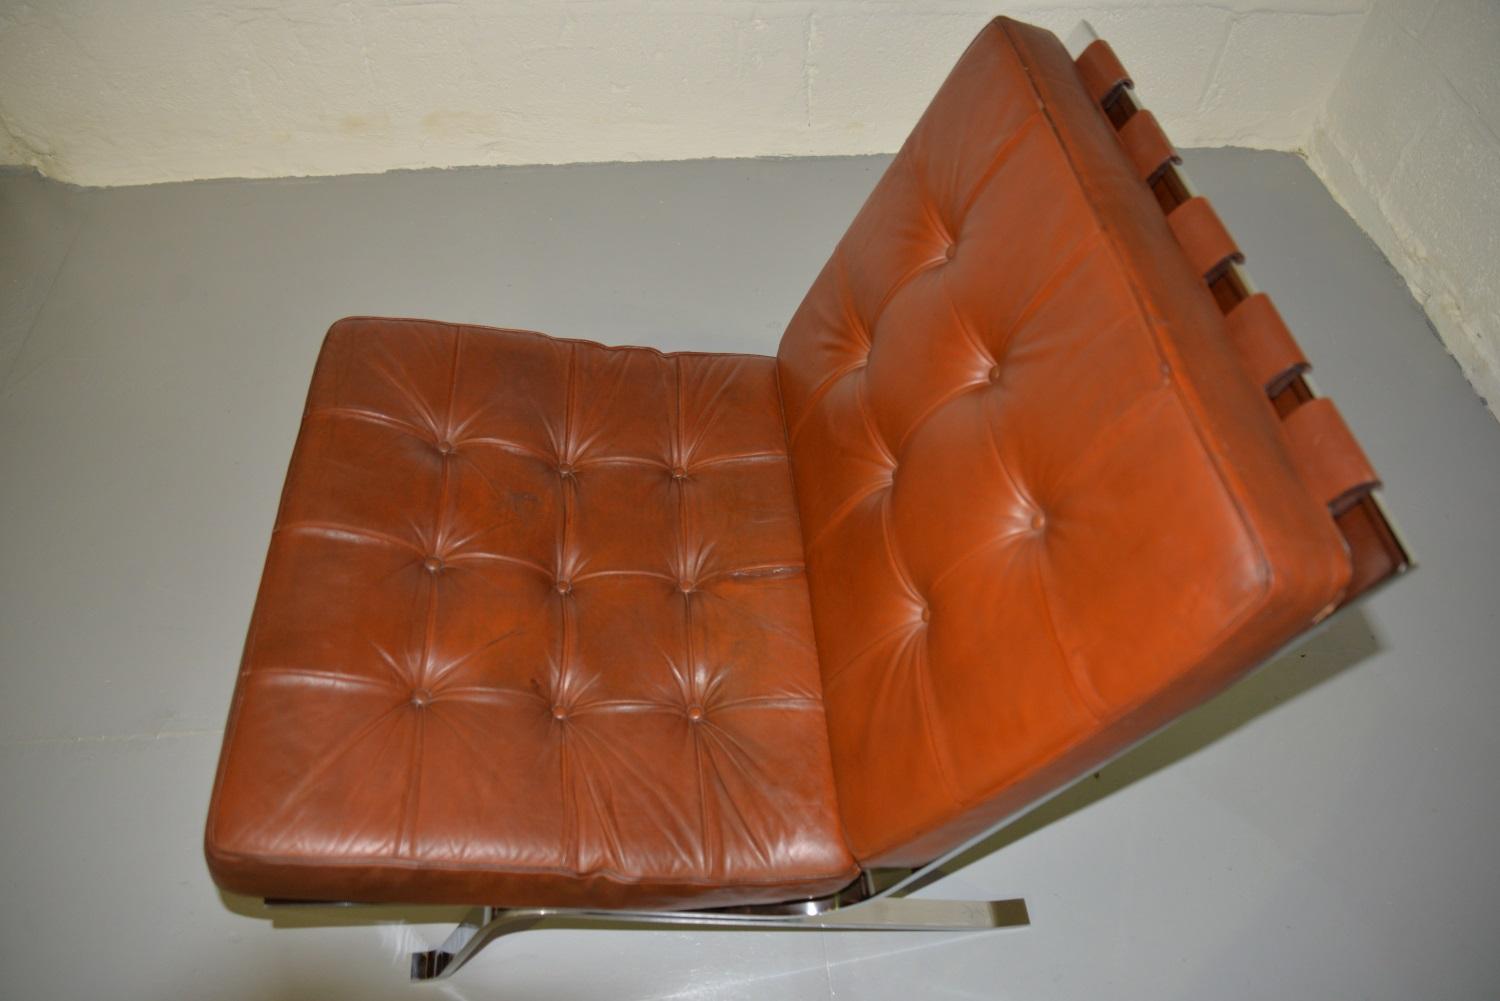 Mid-20th Century Vintage RH-301 Lounge Chair by Robert Haussmann for De Sede, Switzerland 1954 For Sale